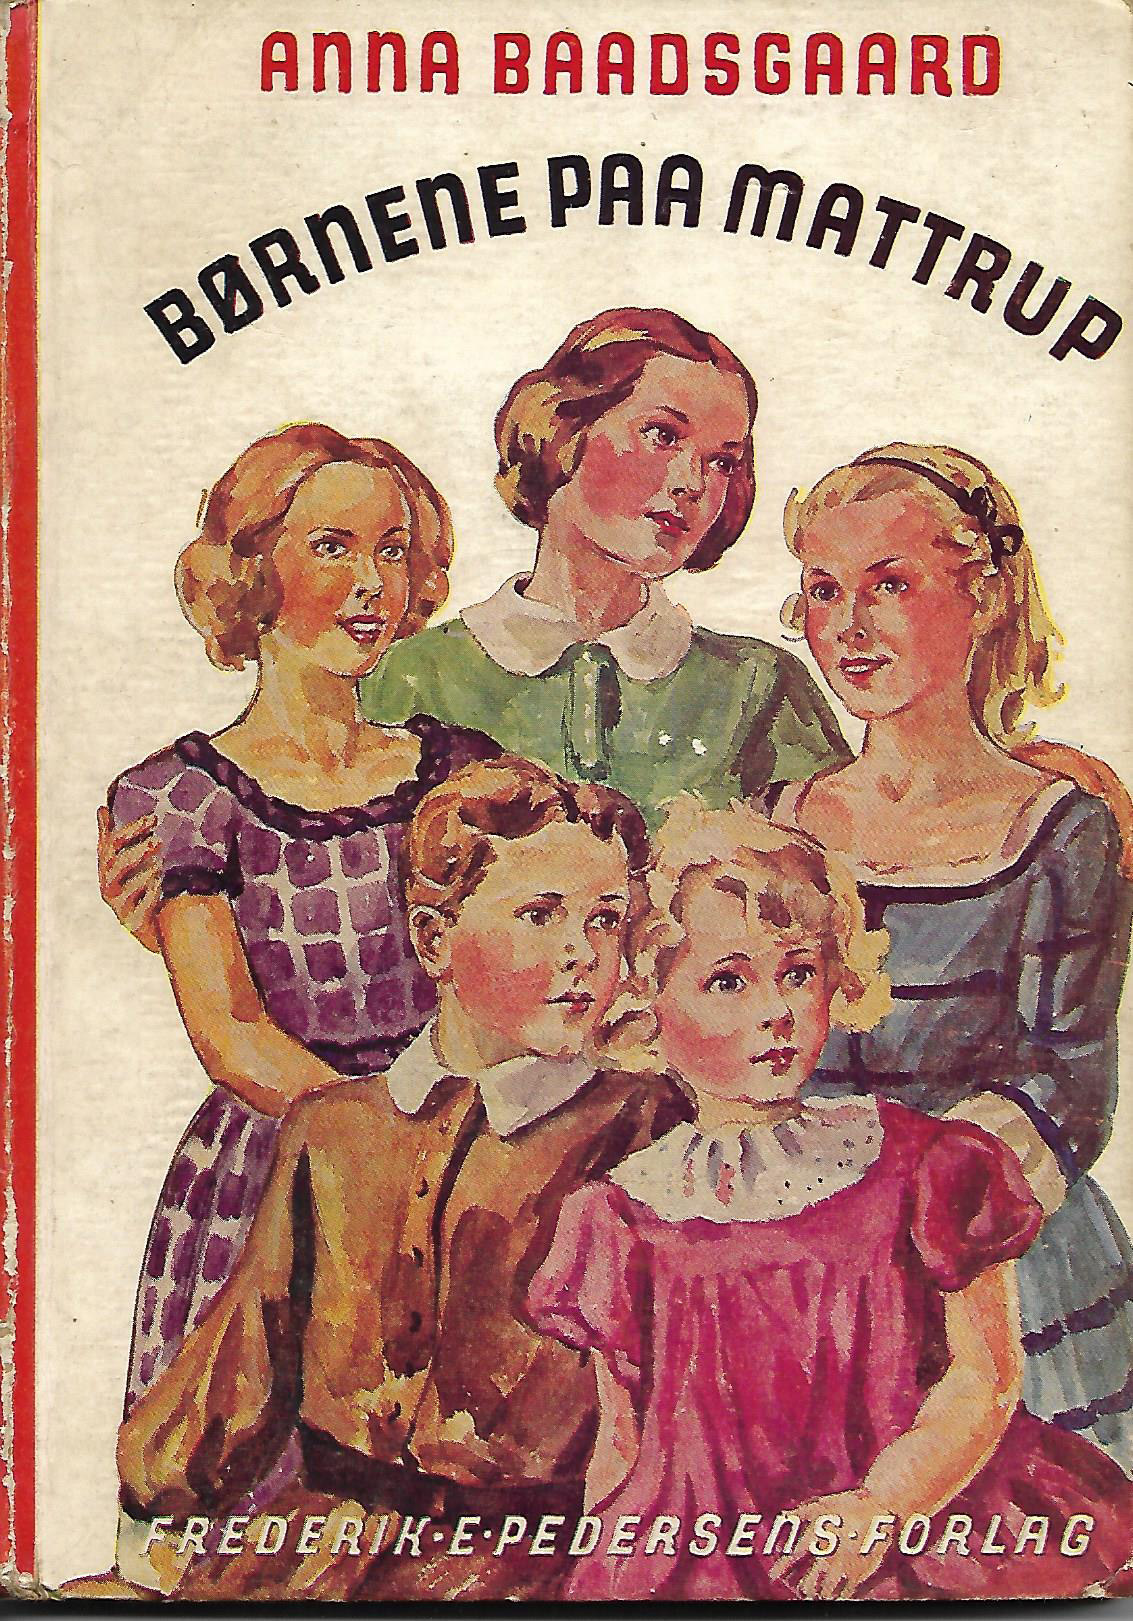 Børnene paa Mattrup - Anna Baadsgaard 1942